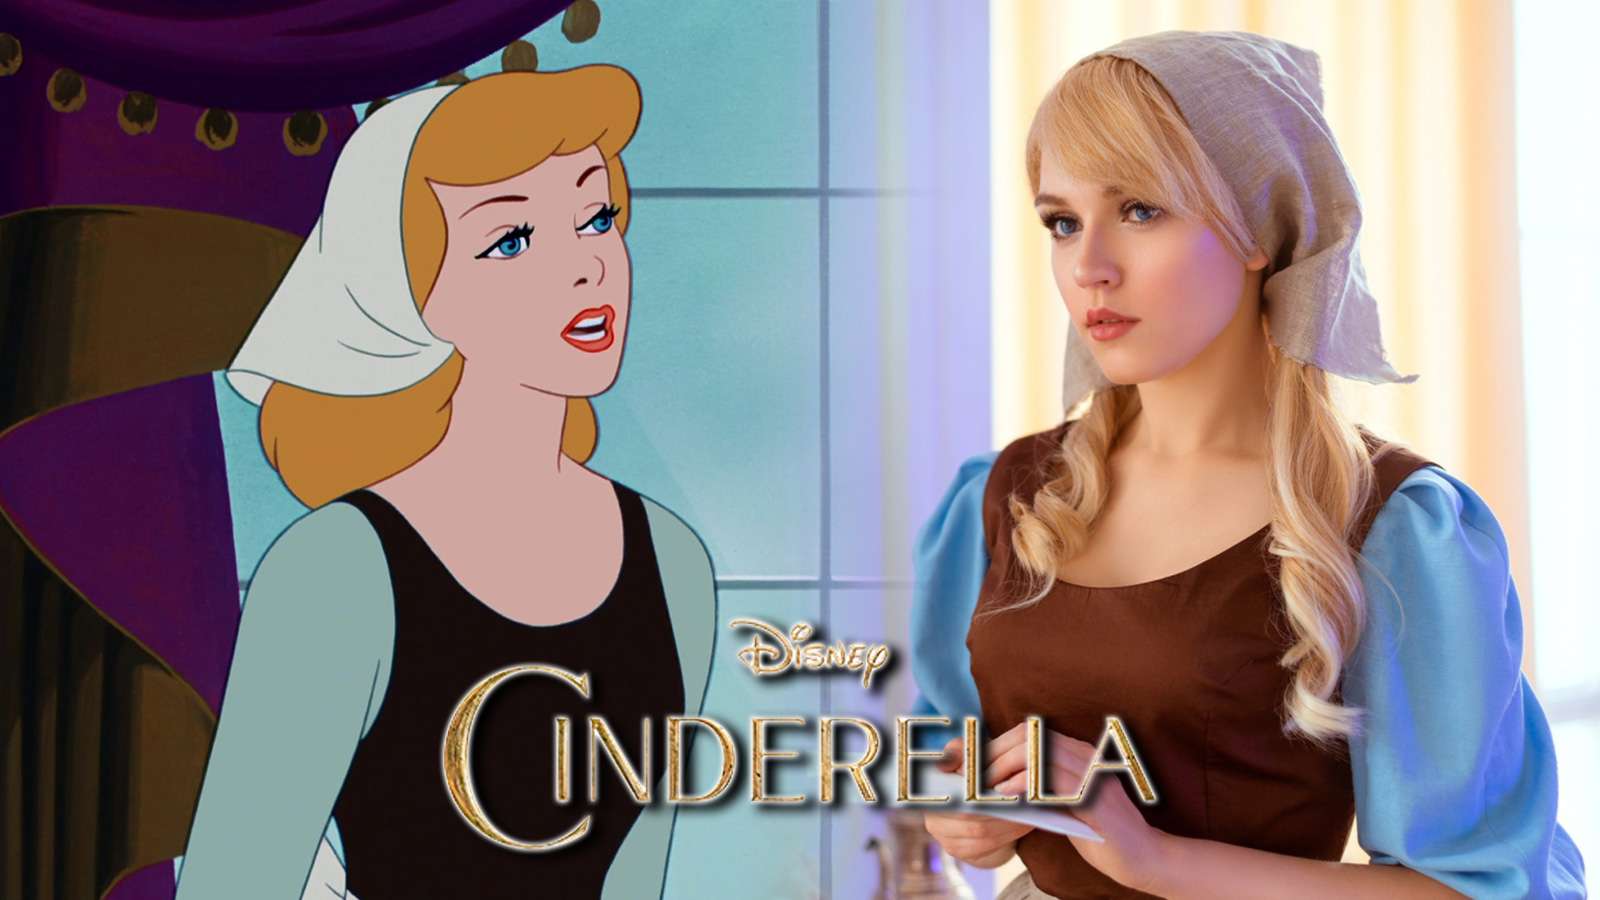 Screenshot of Disney Princess Cinderella next to cosplayer.